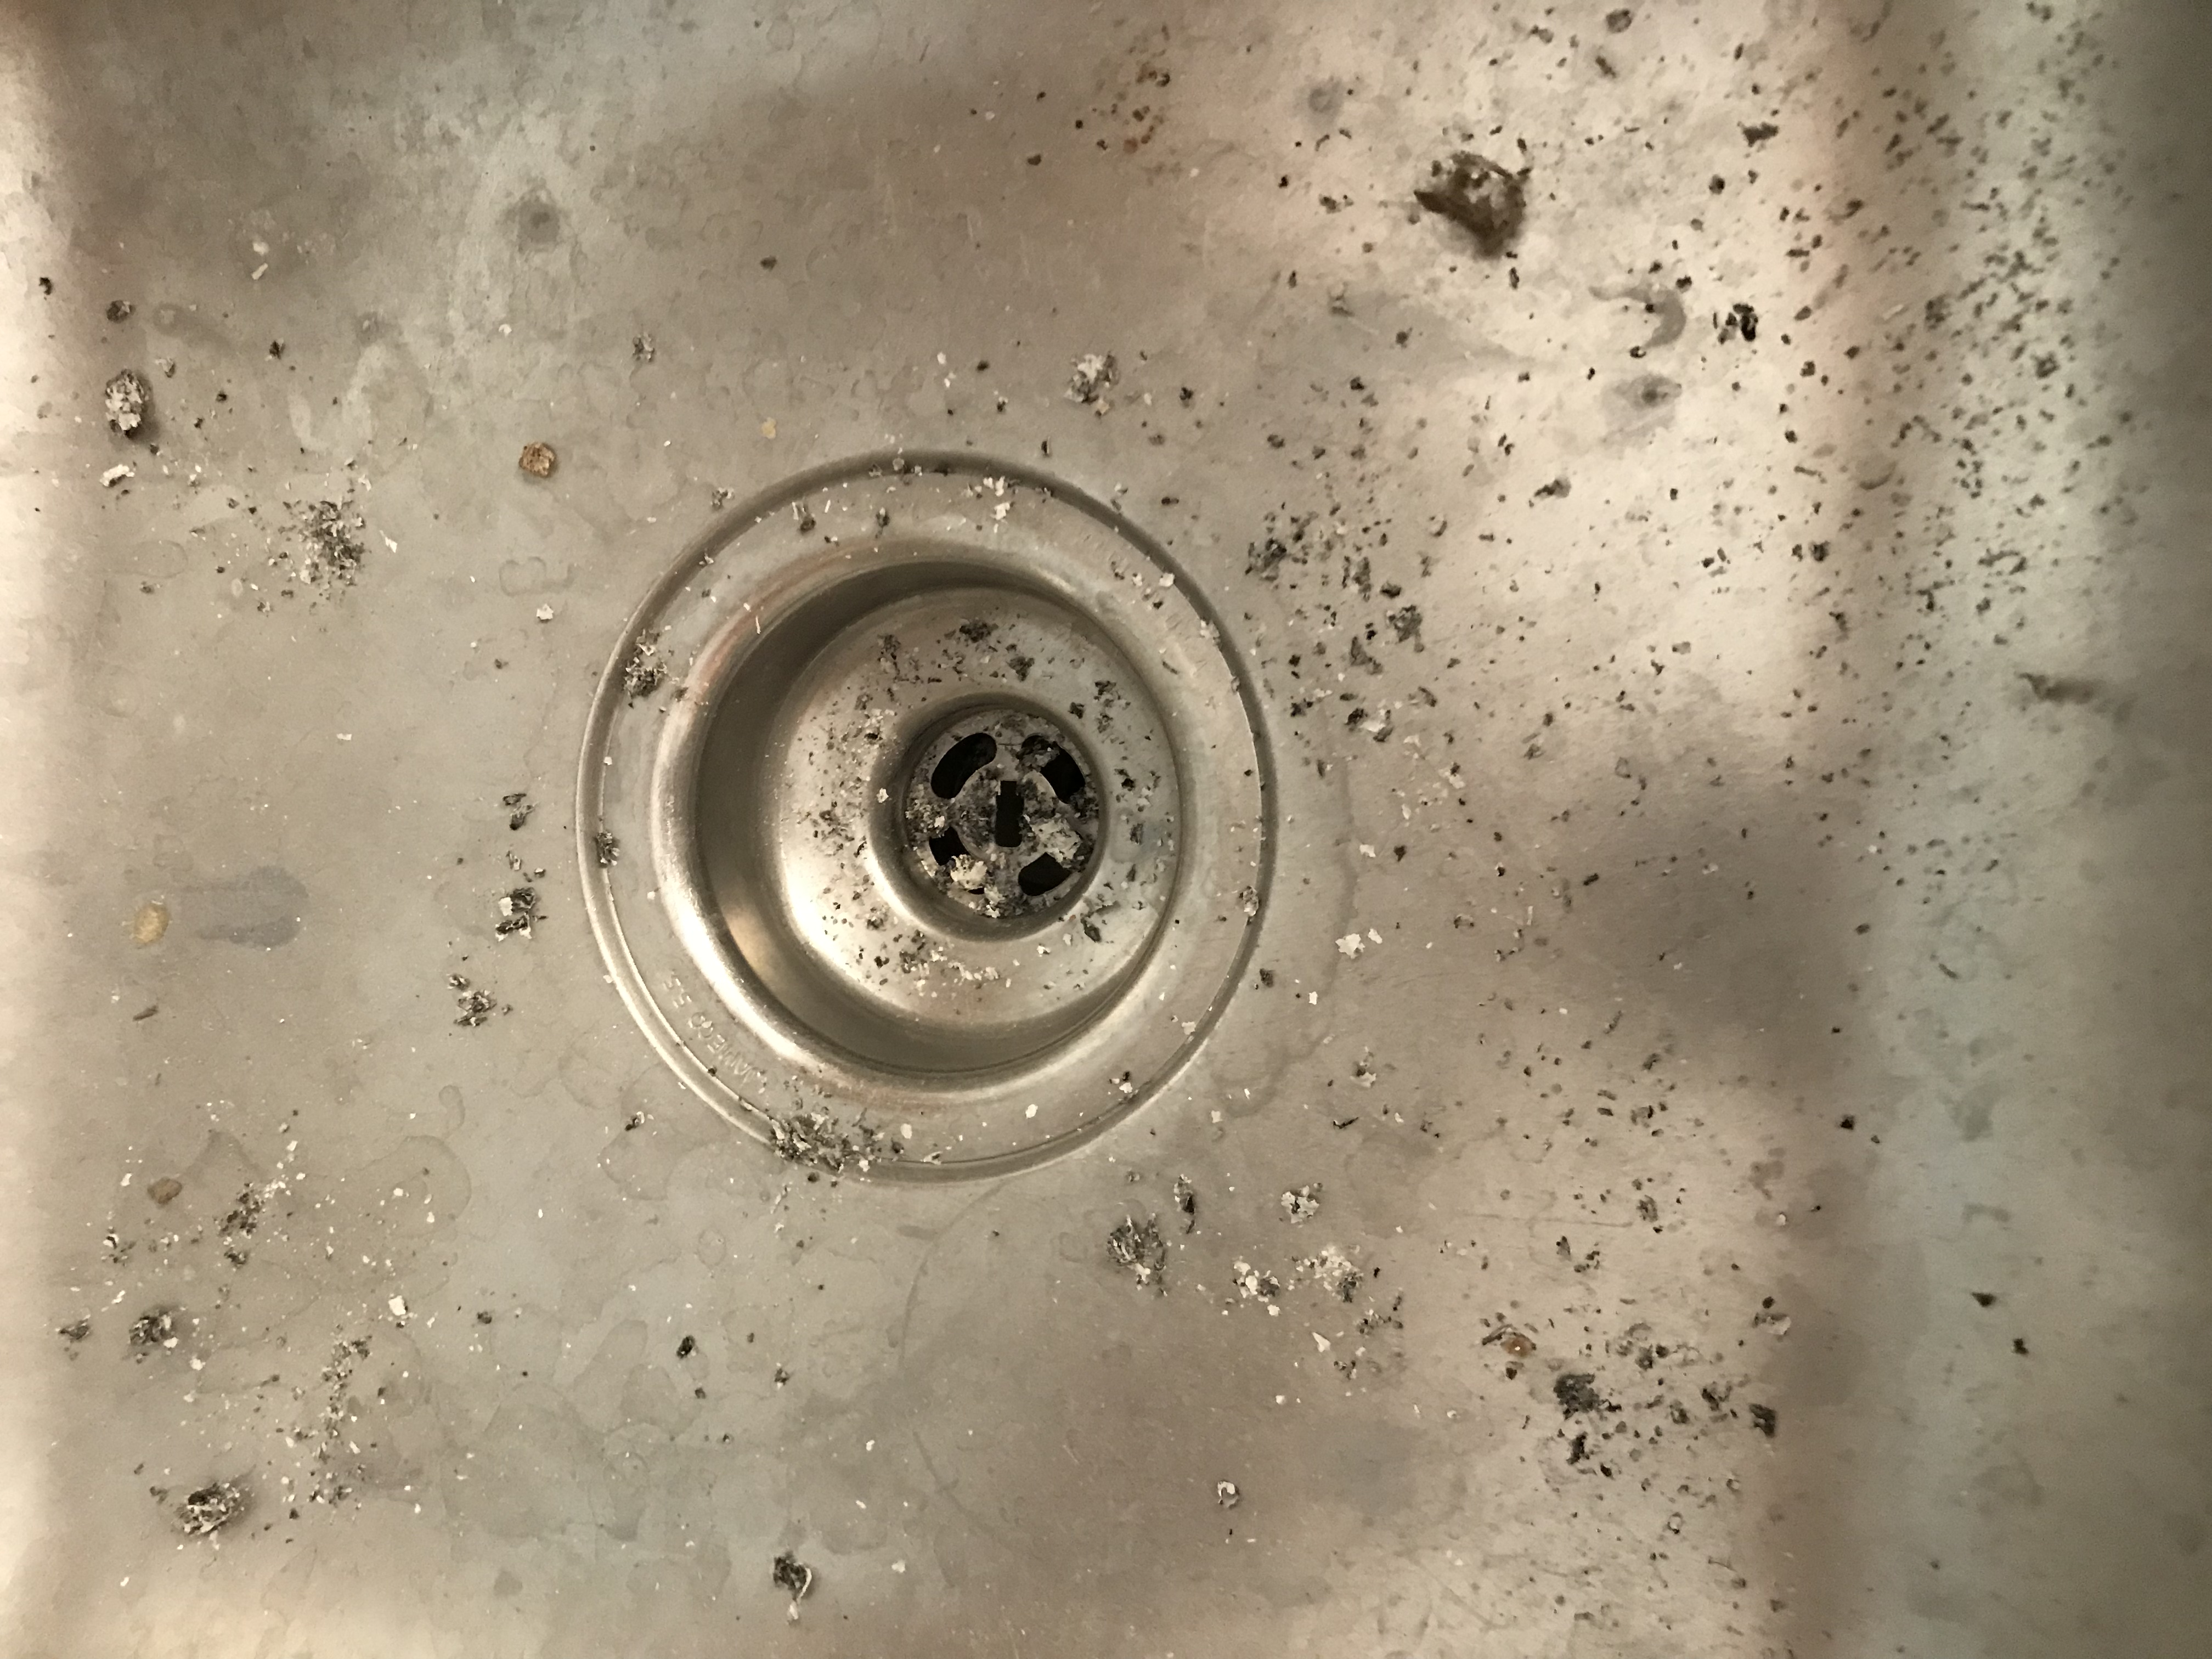 Cigarette Ashes in Kitchen Sink